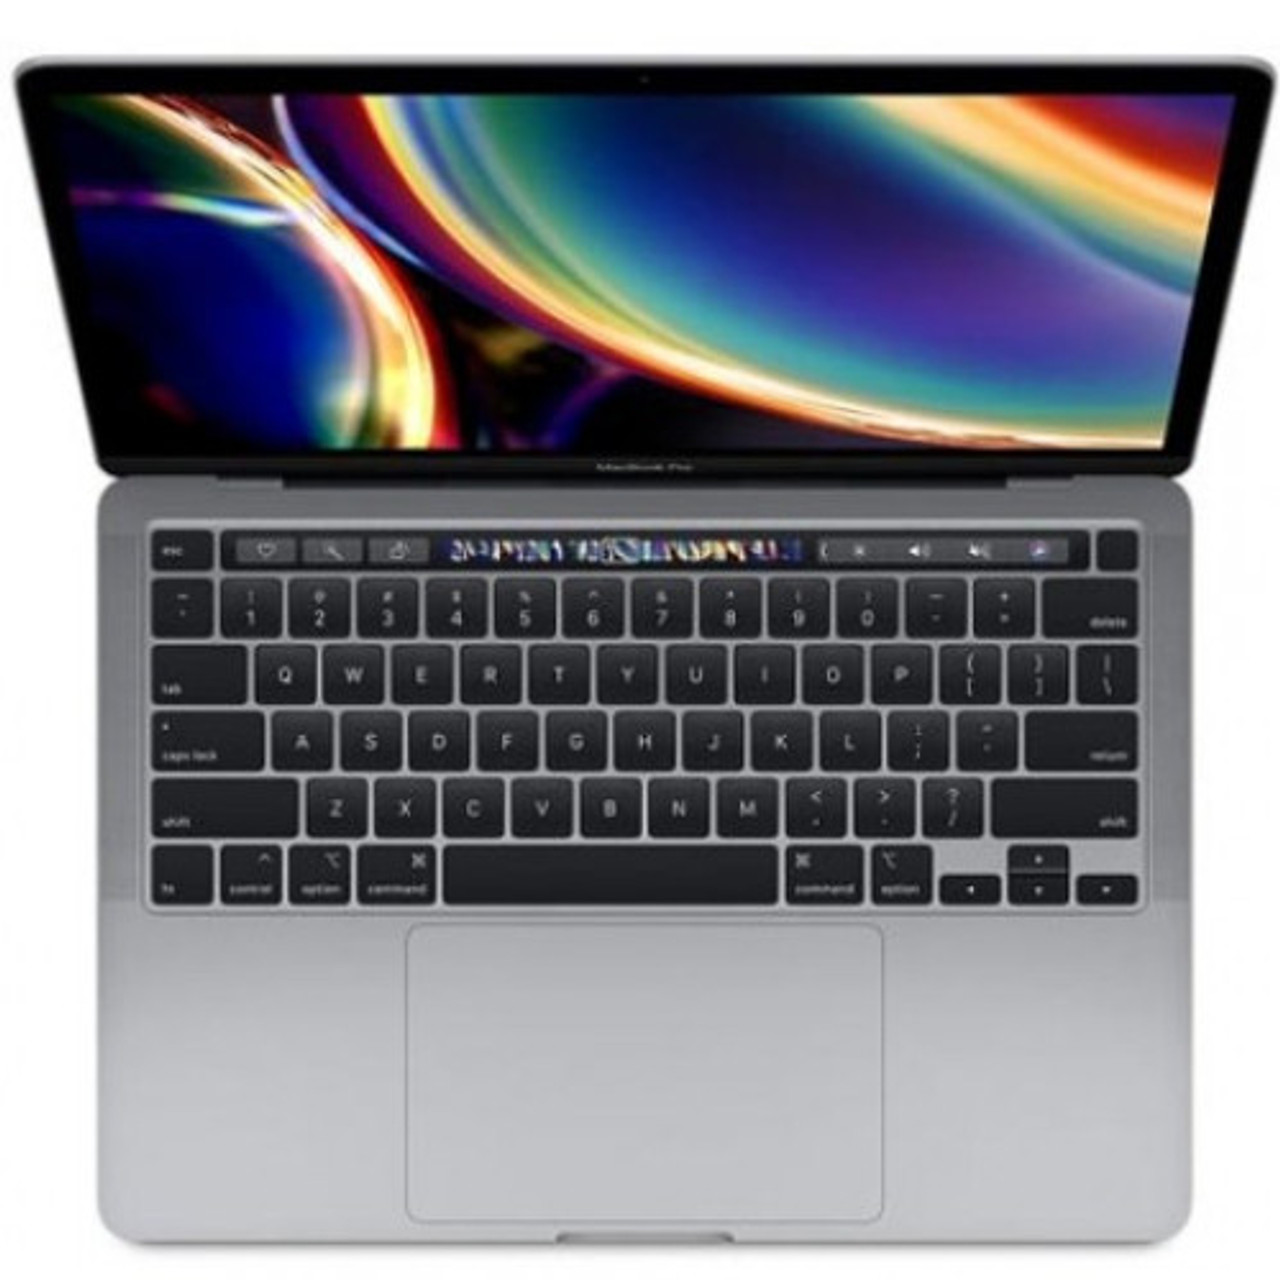 Apple MacBook Pro 13-inch 2.3GHz Core i7 (Retina